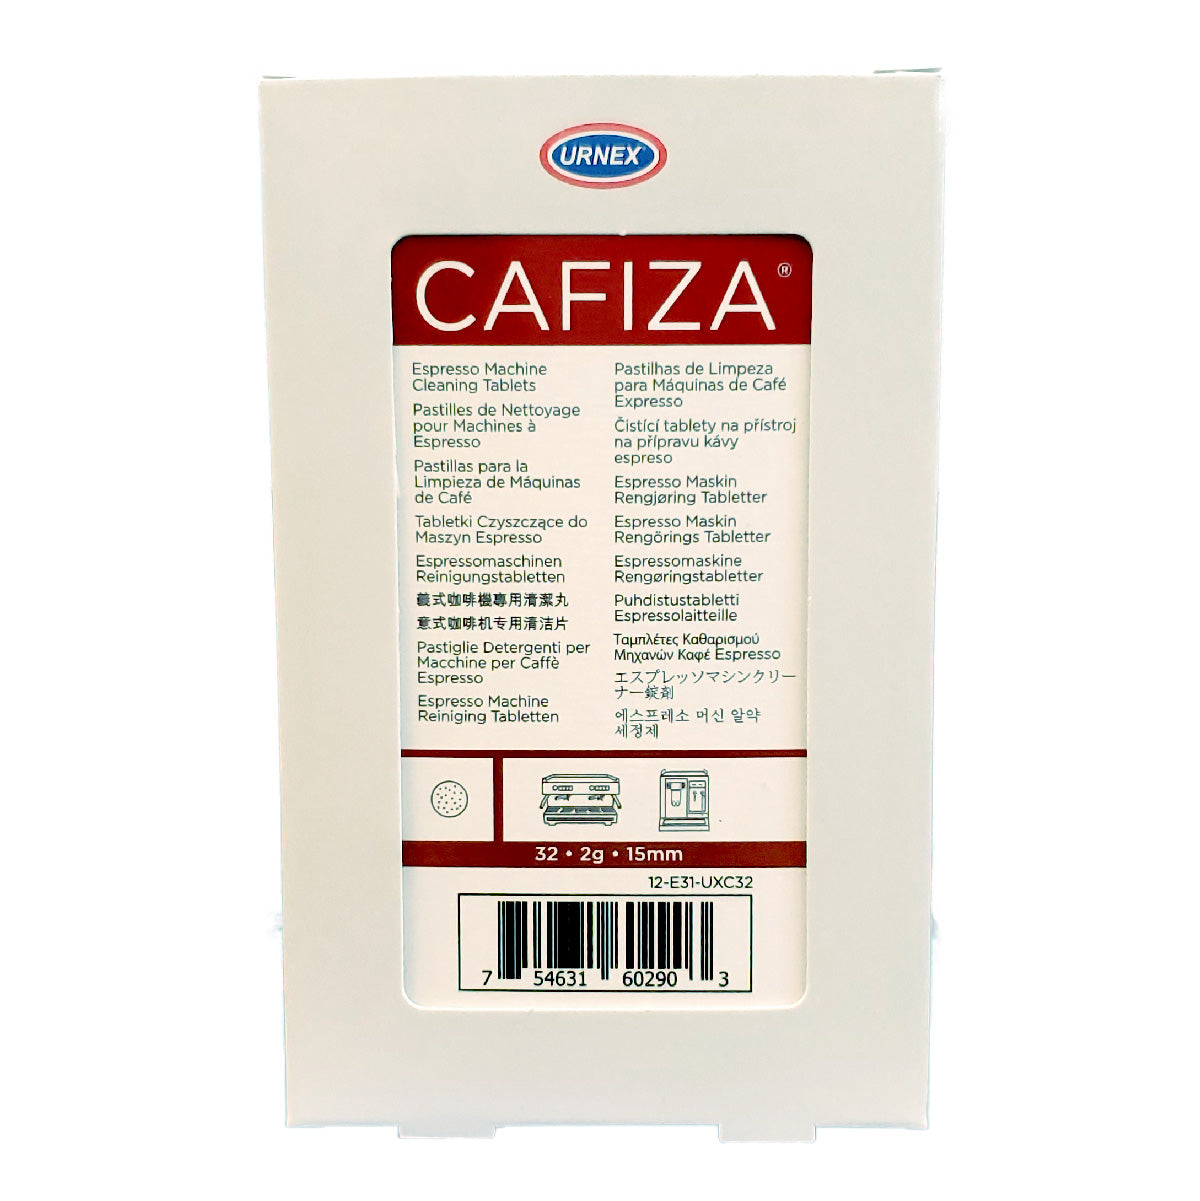 CAFIZA Espresso Machine Cleaning Tablets